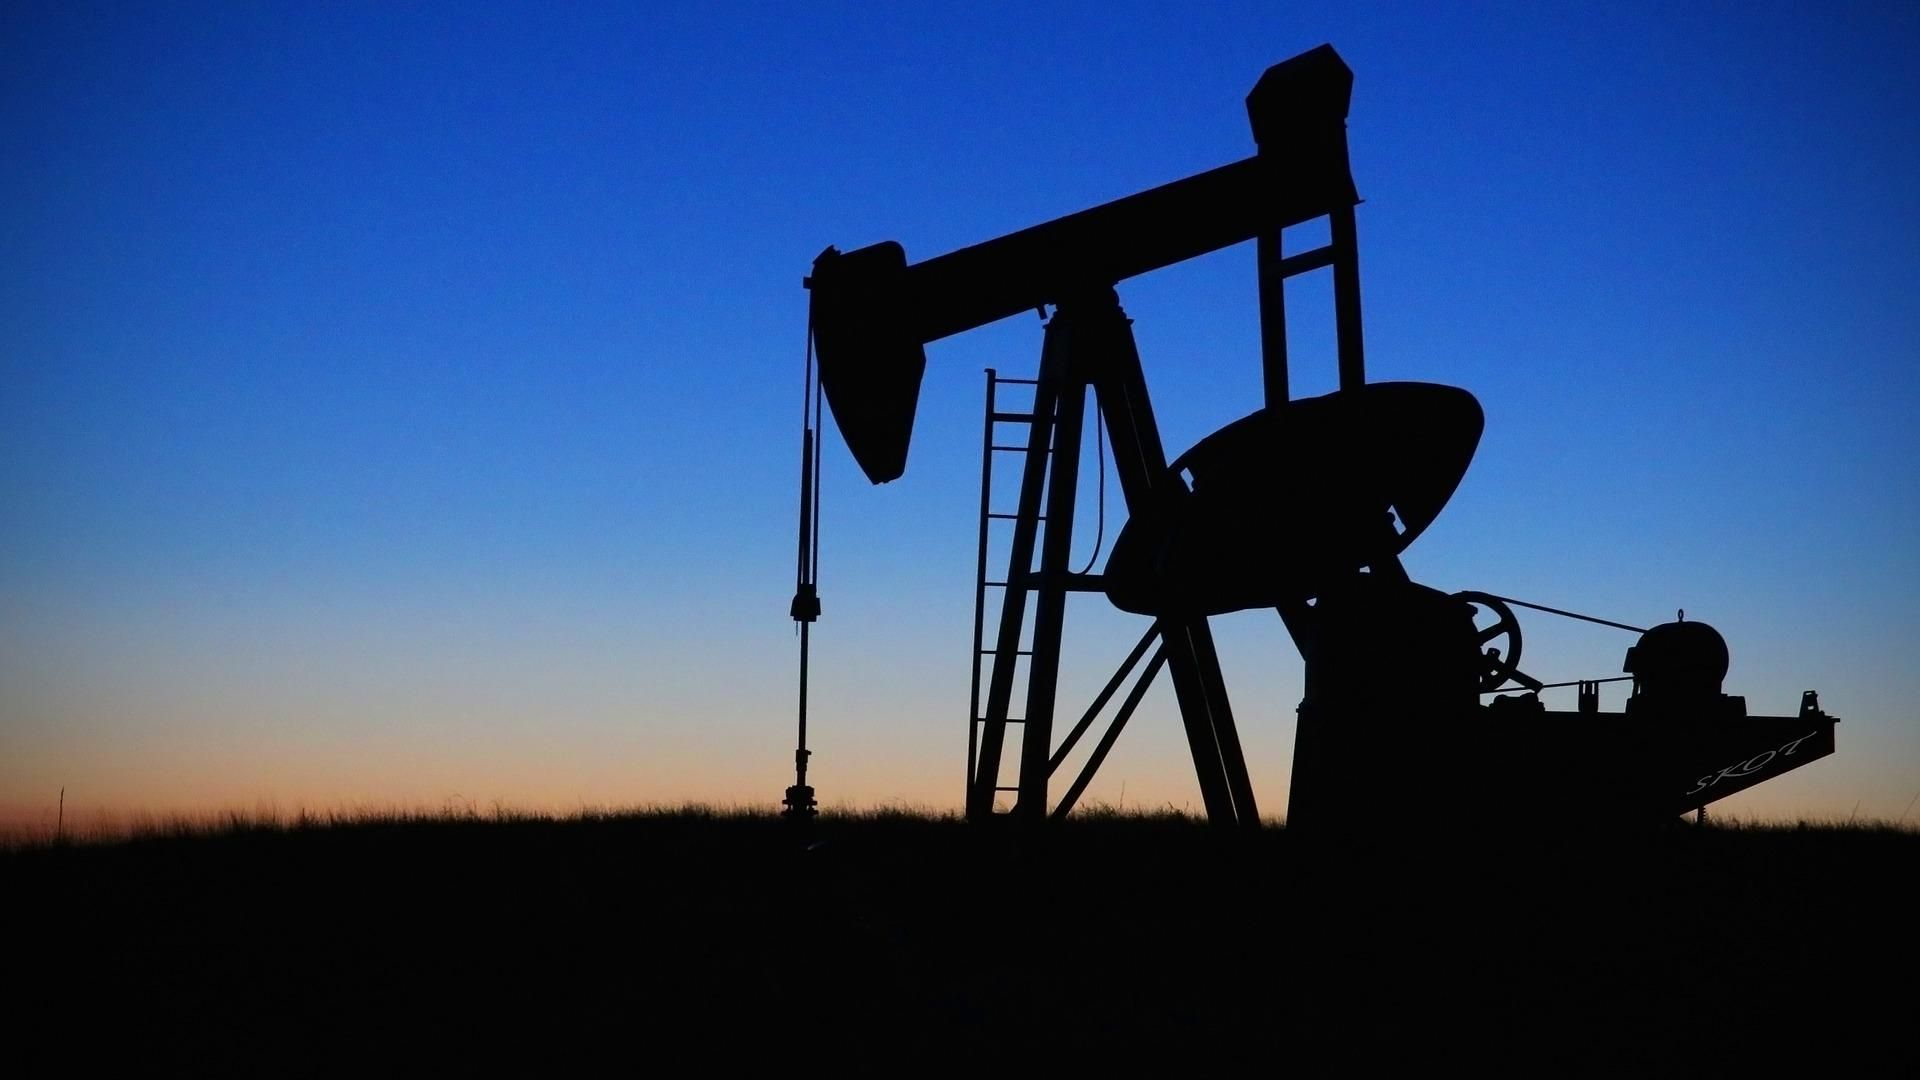 Цены на нефть 26 октября 2020 падают – последние данные